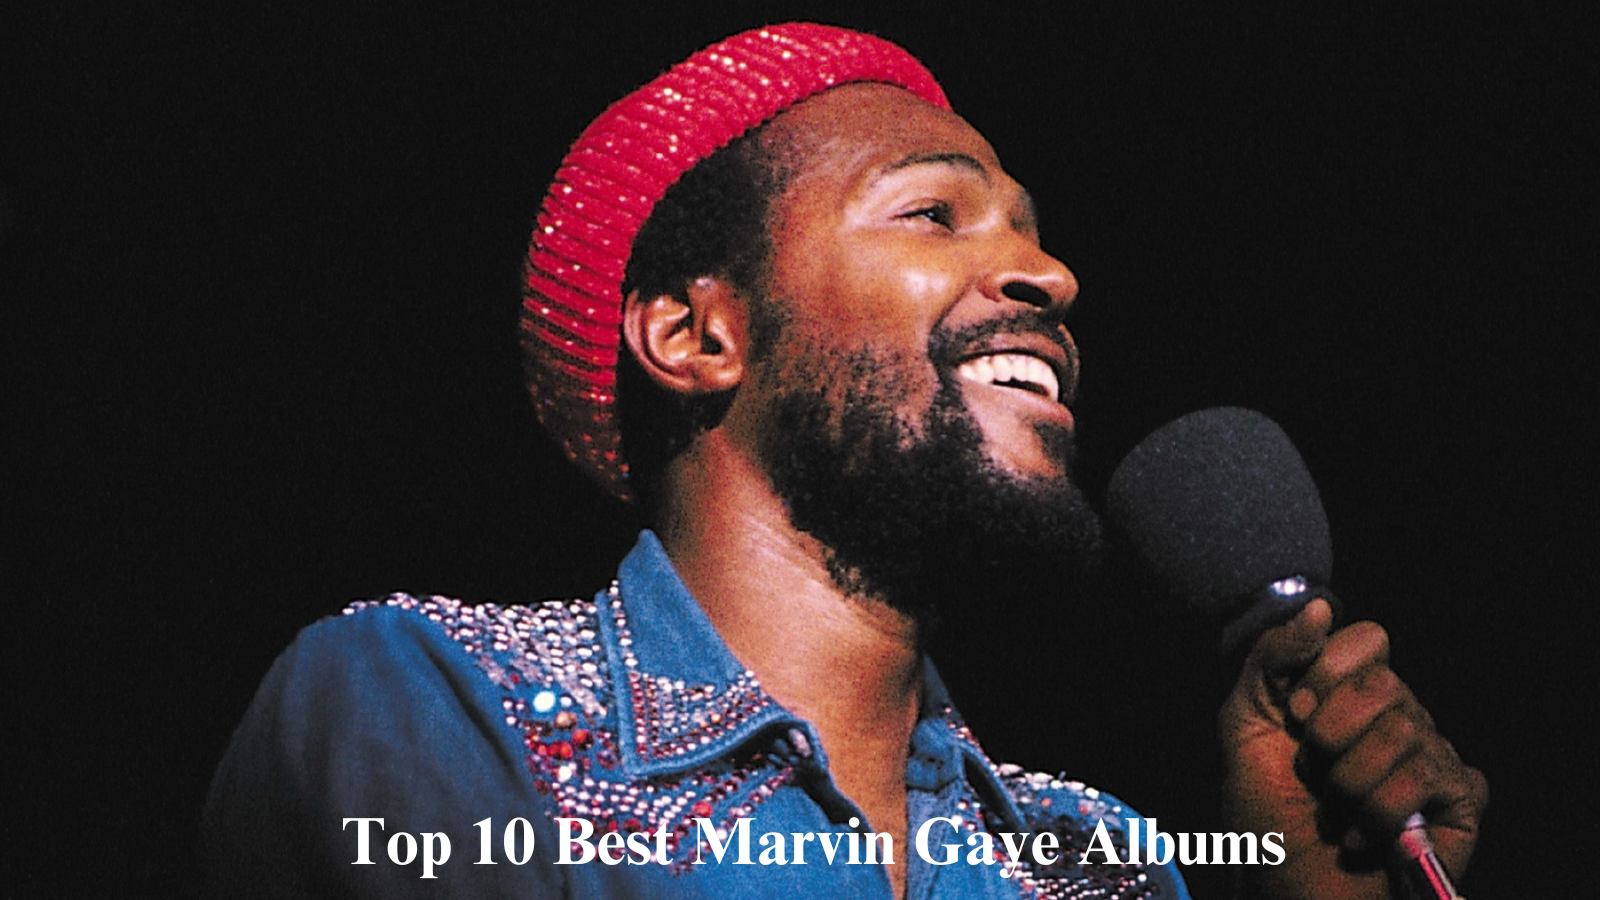 Top 10 Best Marvin Gaye Albums